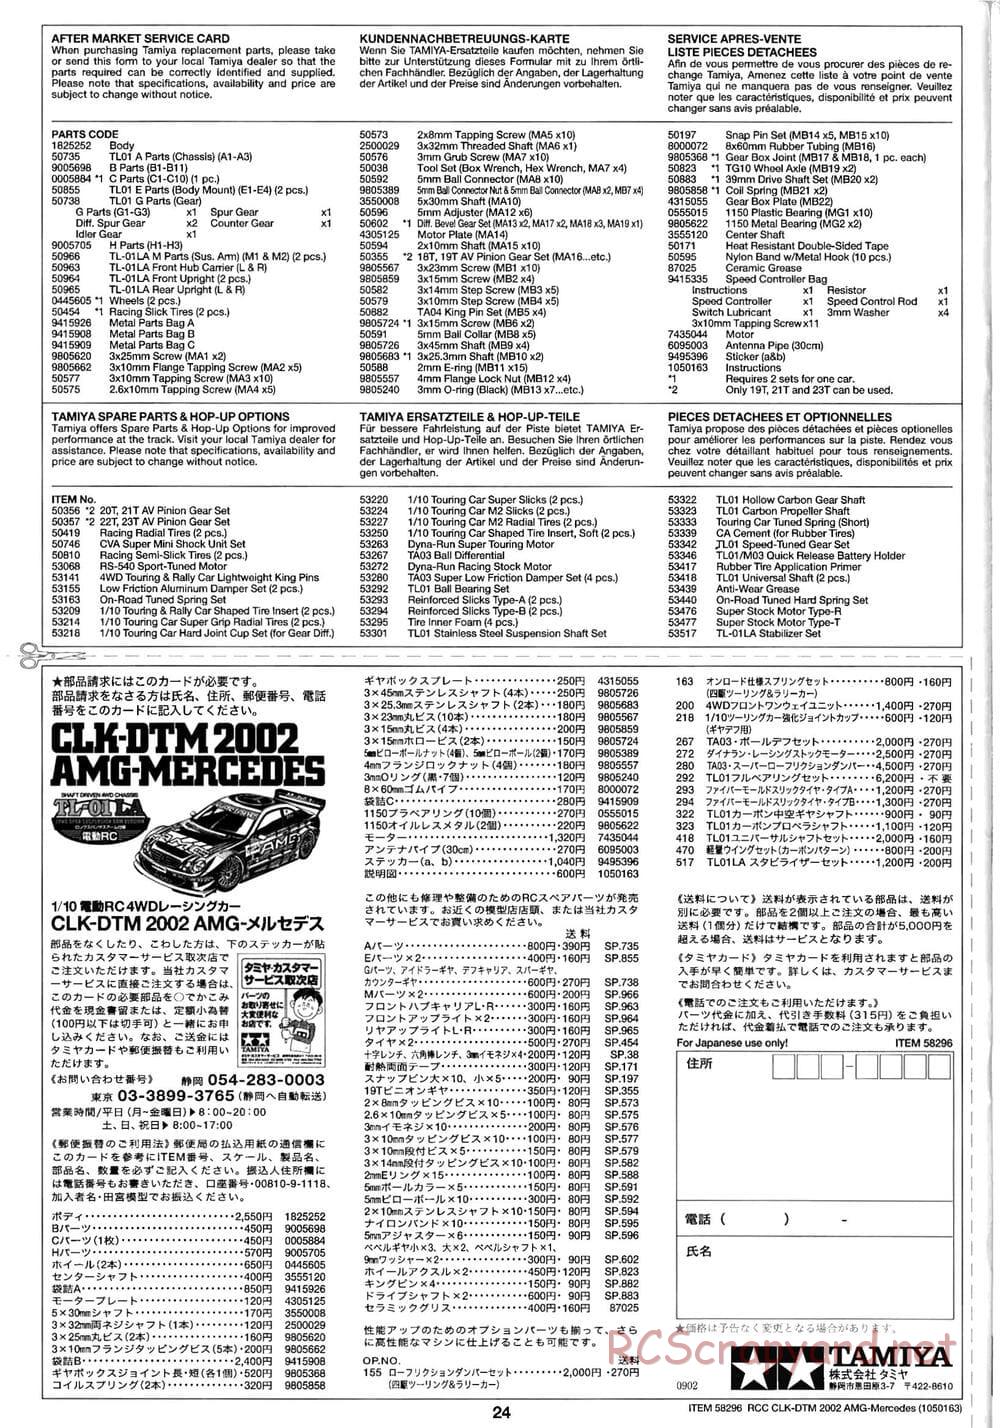 Tamiya - CLK DTM 2002 AMG Mercedes - TL-01 LA Chassis - Manual - Page 24